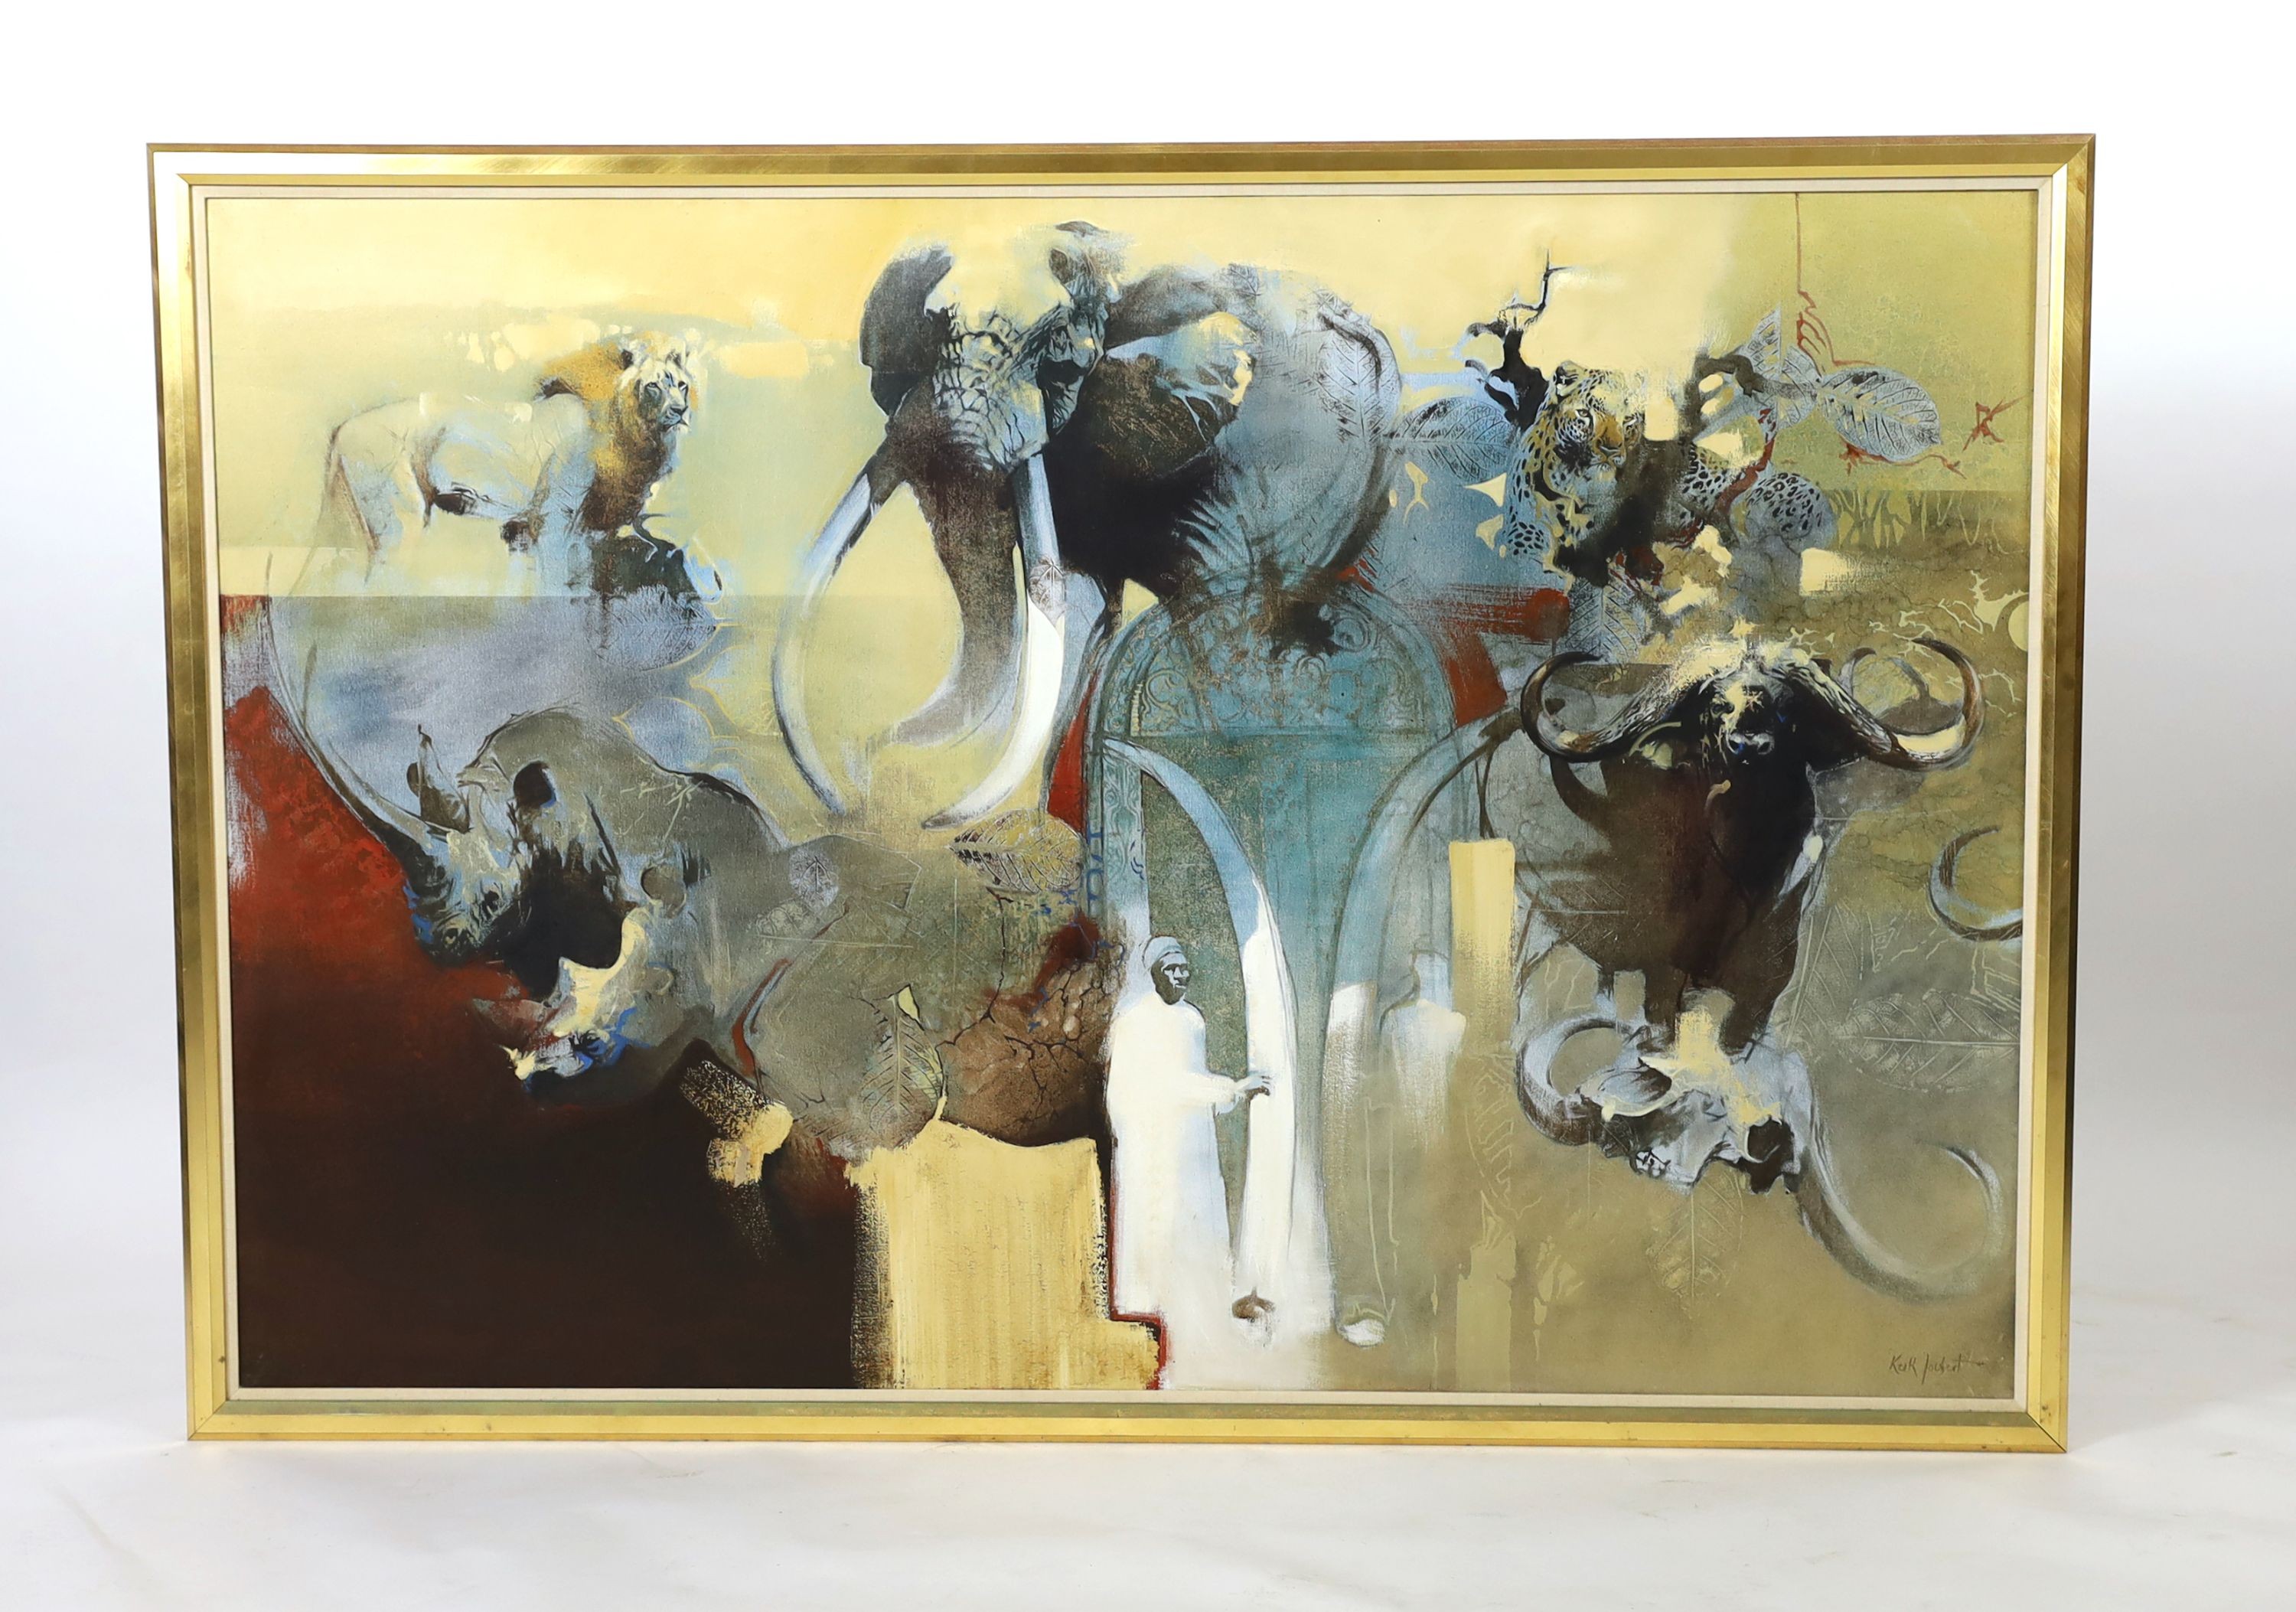 Keith Joubert (SA, 1948-2013), 'The Big Five', oil on canvas, 121 x 182cm